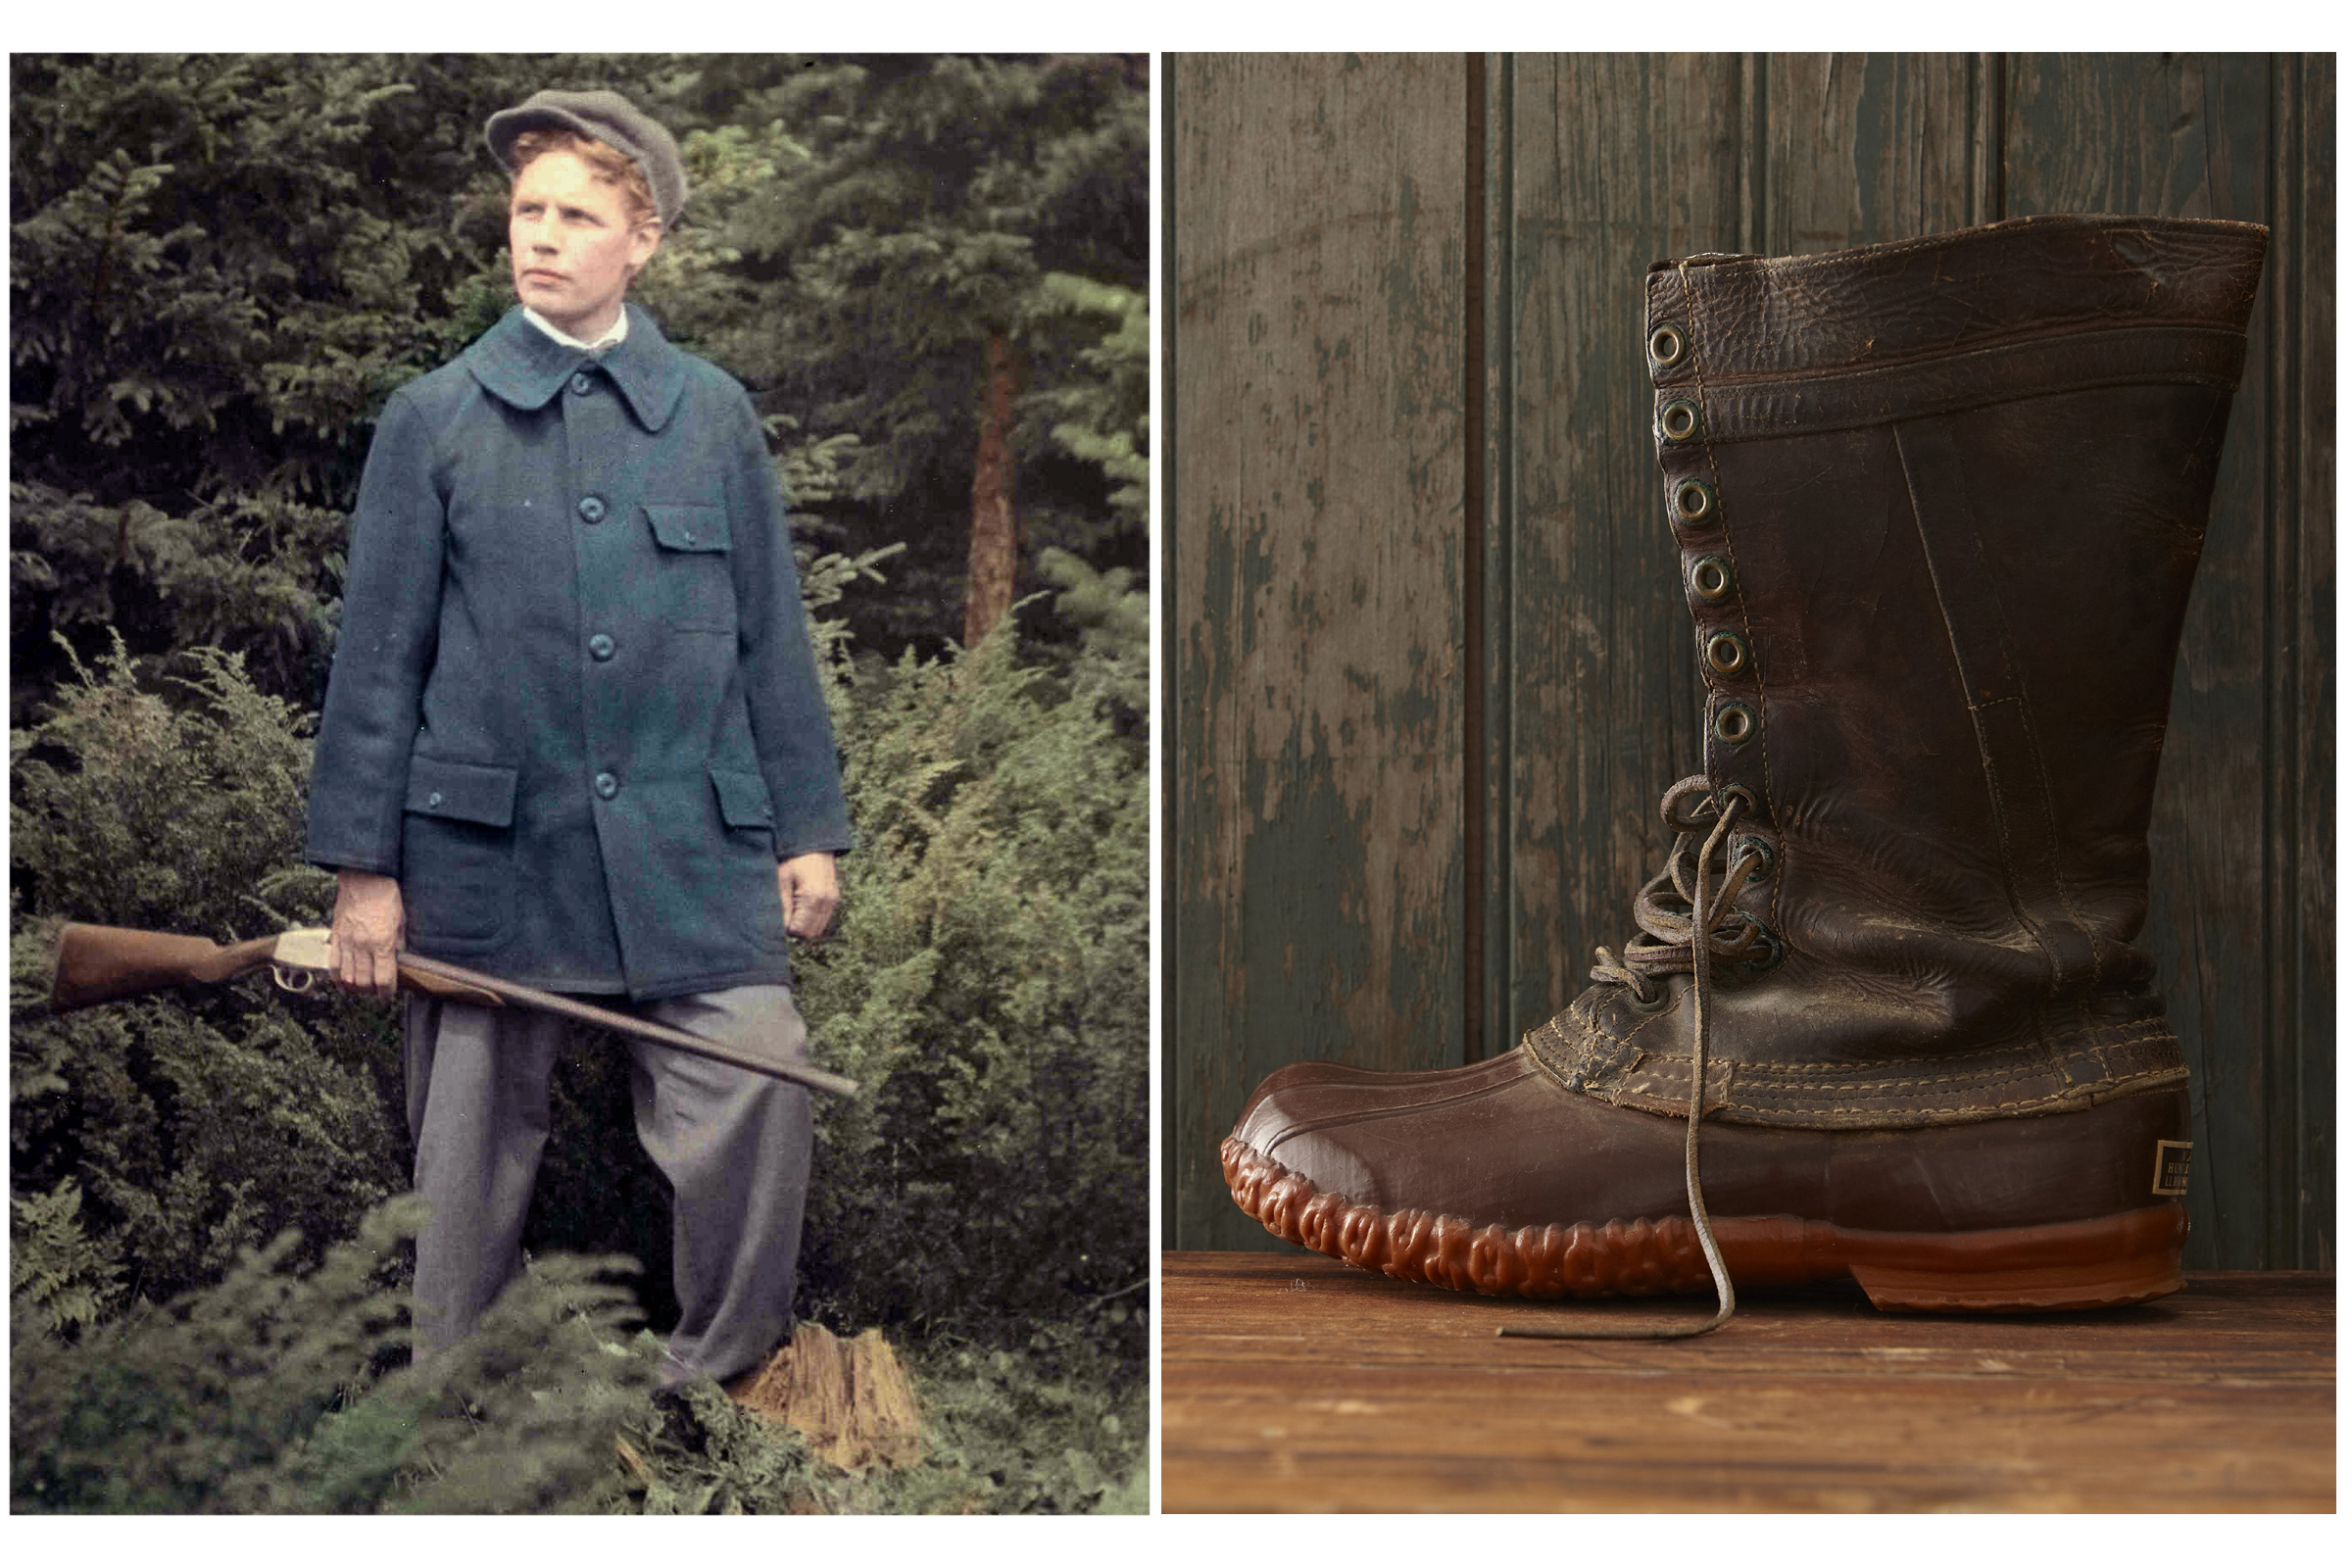 Bean BootsとBoat and Tote Bag、L.L.Beanの100年を超える歴史と名品を